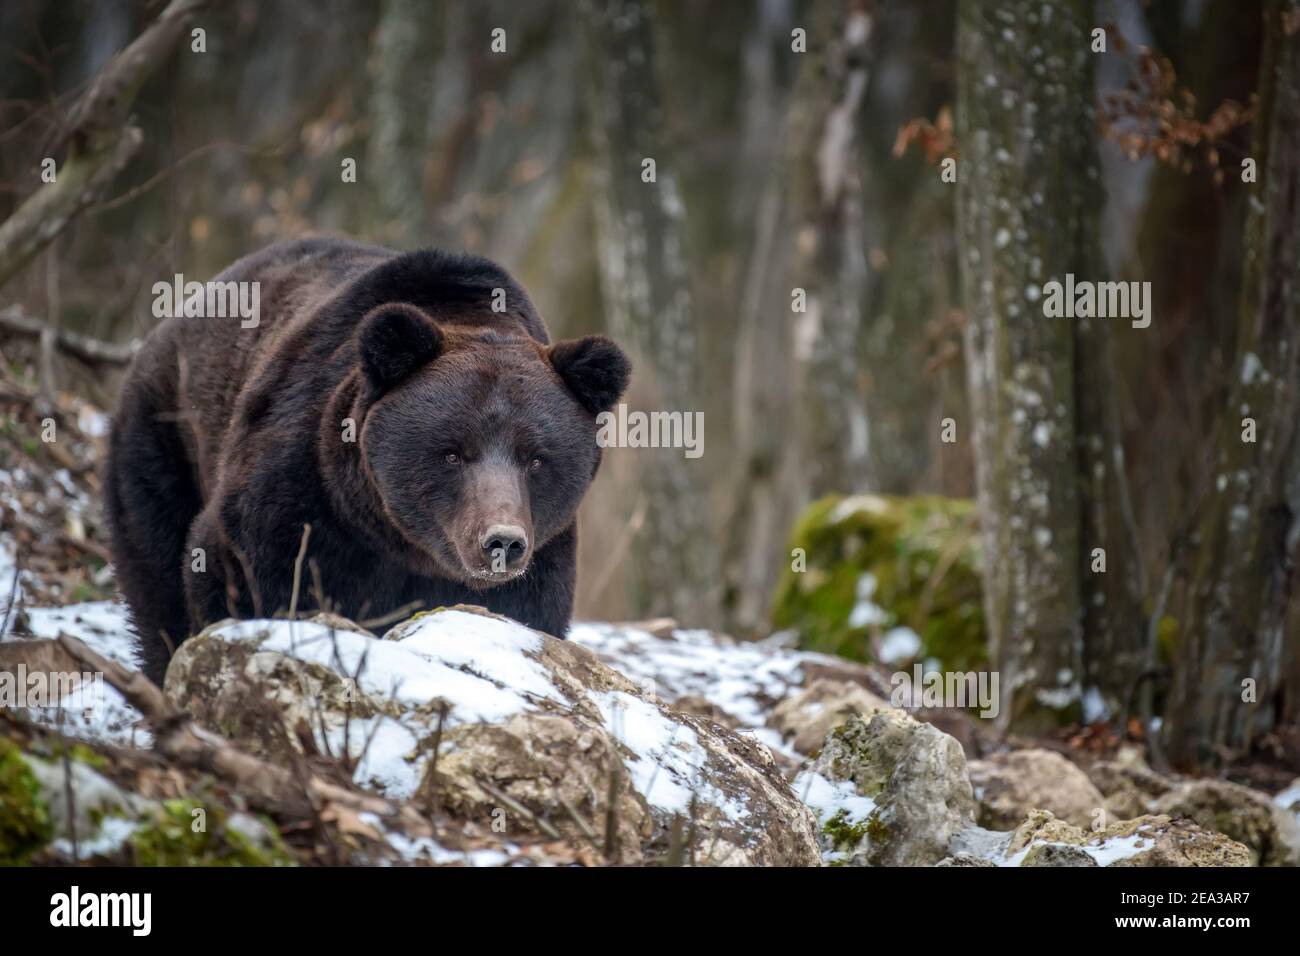 Wild adult Brown Bear (Ursus Arctos) in the winter forest. Dangerous animal in natural habitat. Wildlife scene Stock Photo